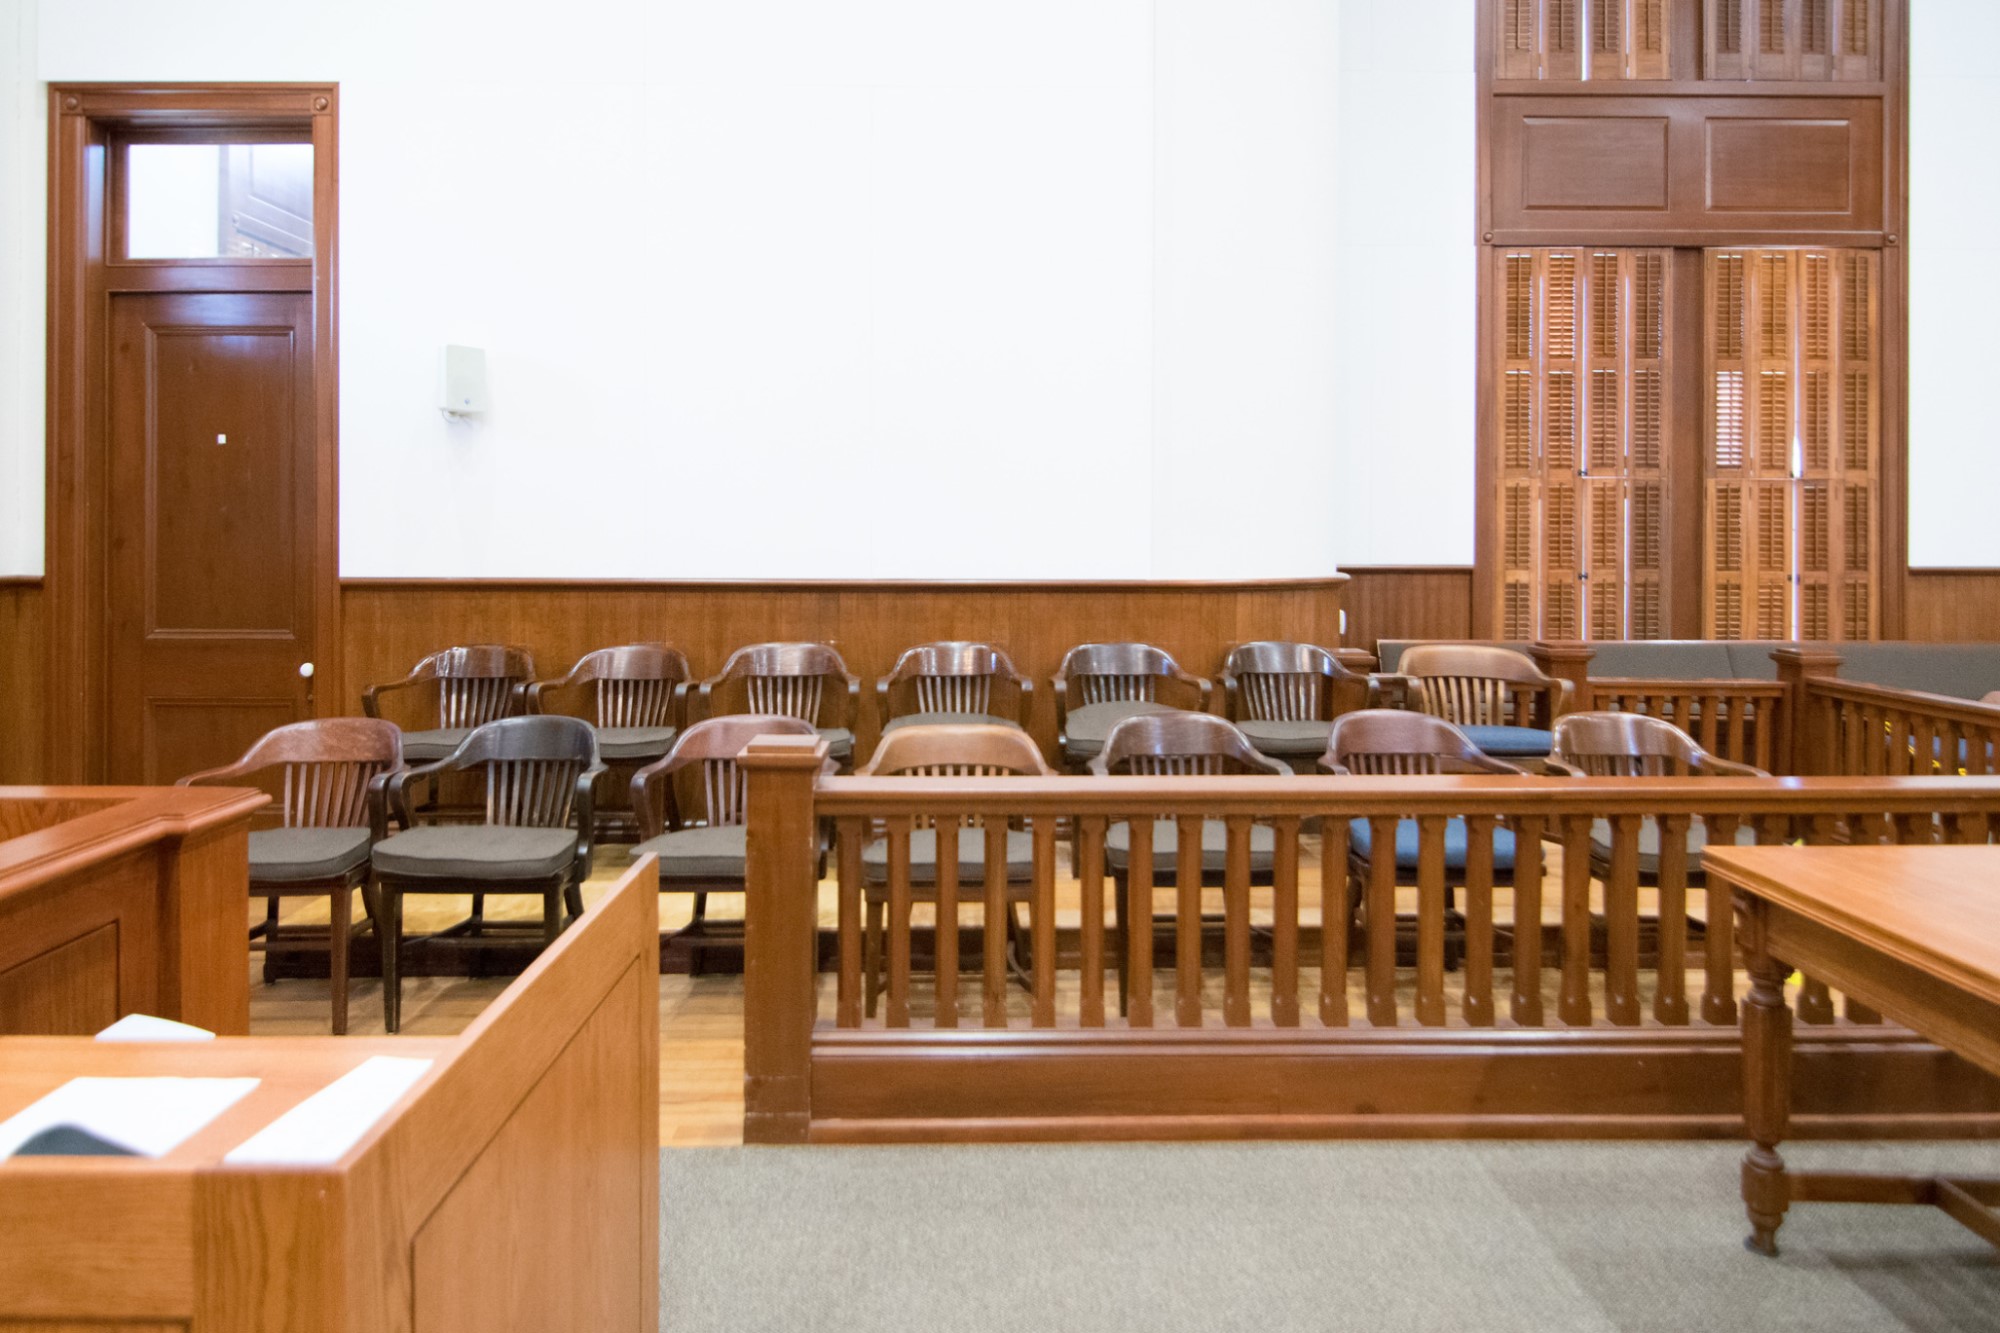 photograph of empty jury box